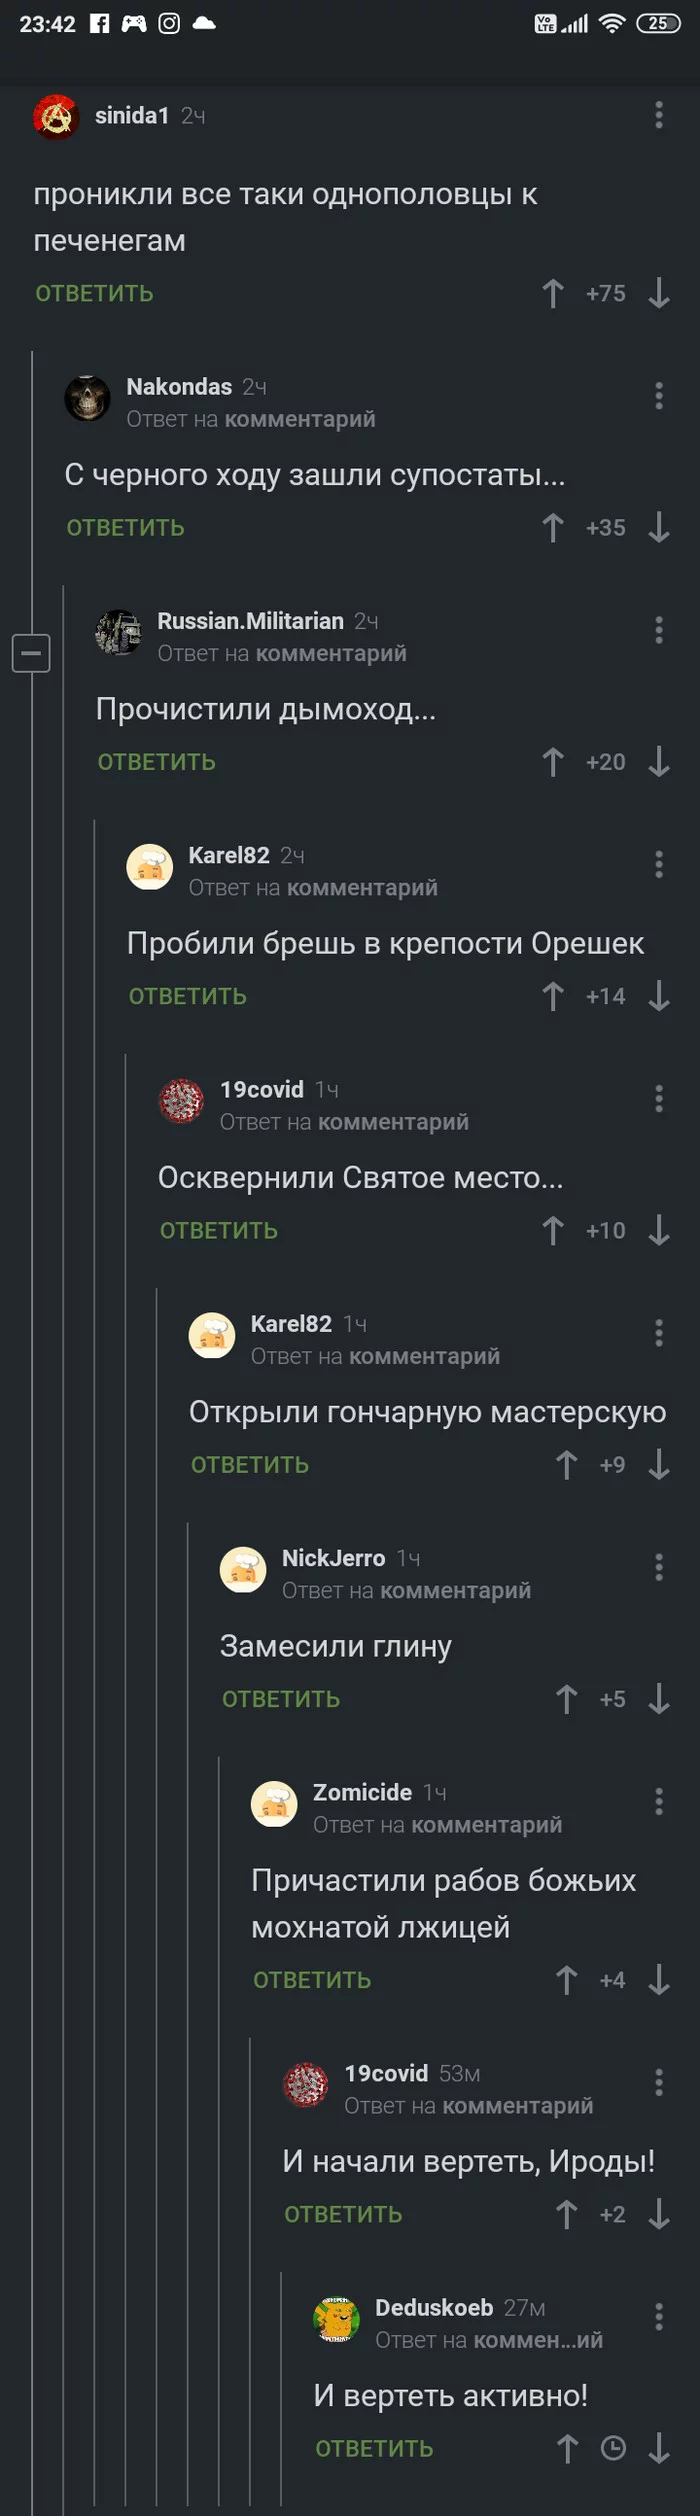 The Polovtsians have already reached Kyiv - Comments on Peekaboo, Polovtsi, Pechenegs, Kiev, Humor, Longpost